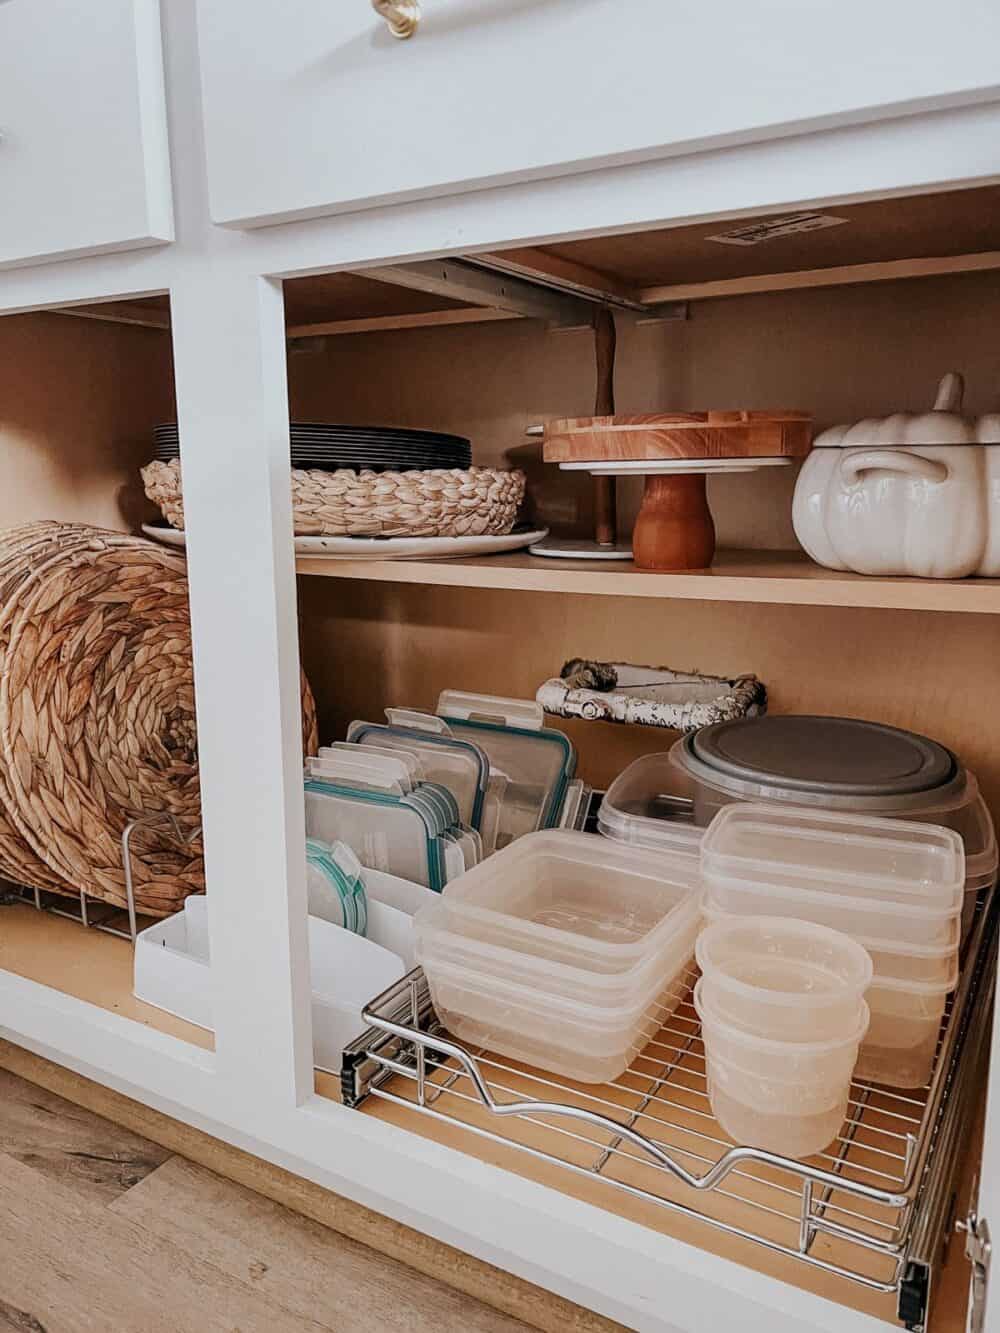 Organized kitchen cabinet with tupperware 